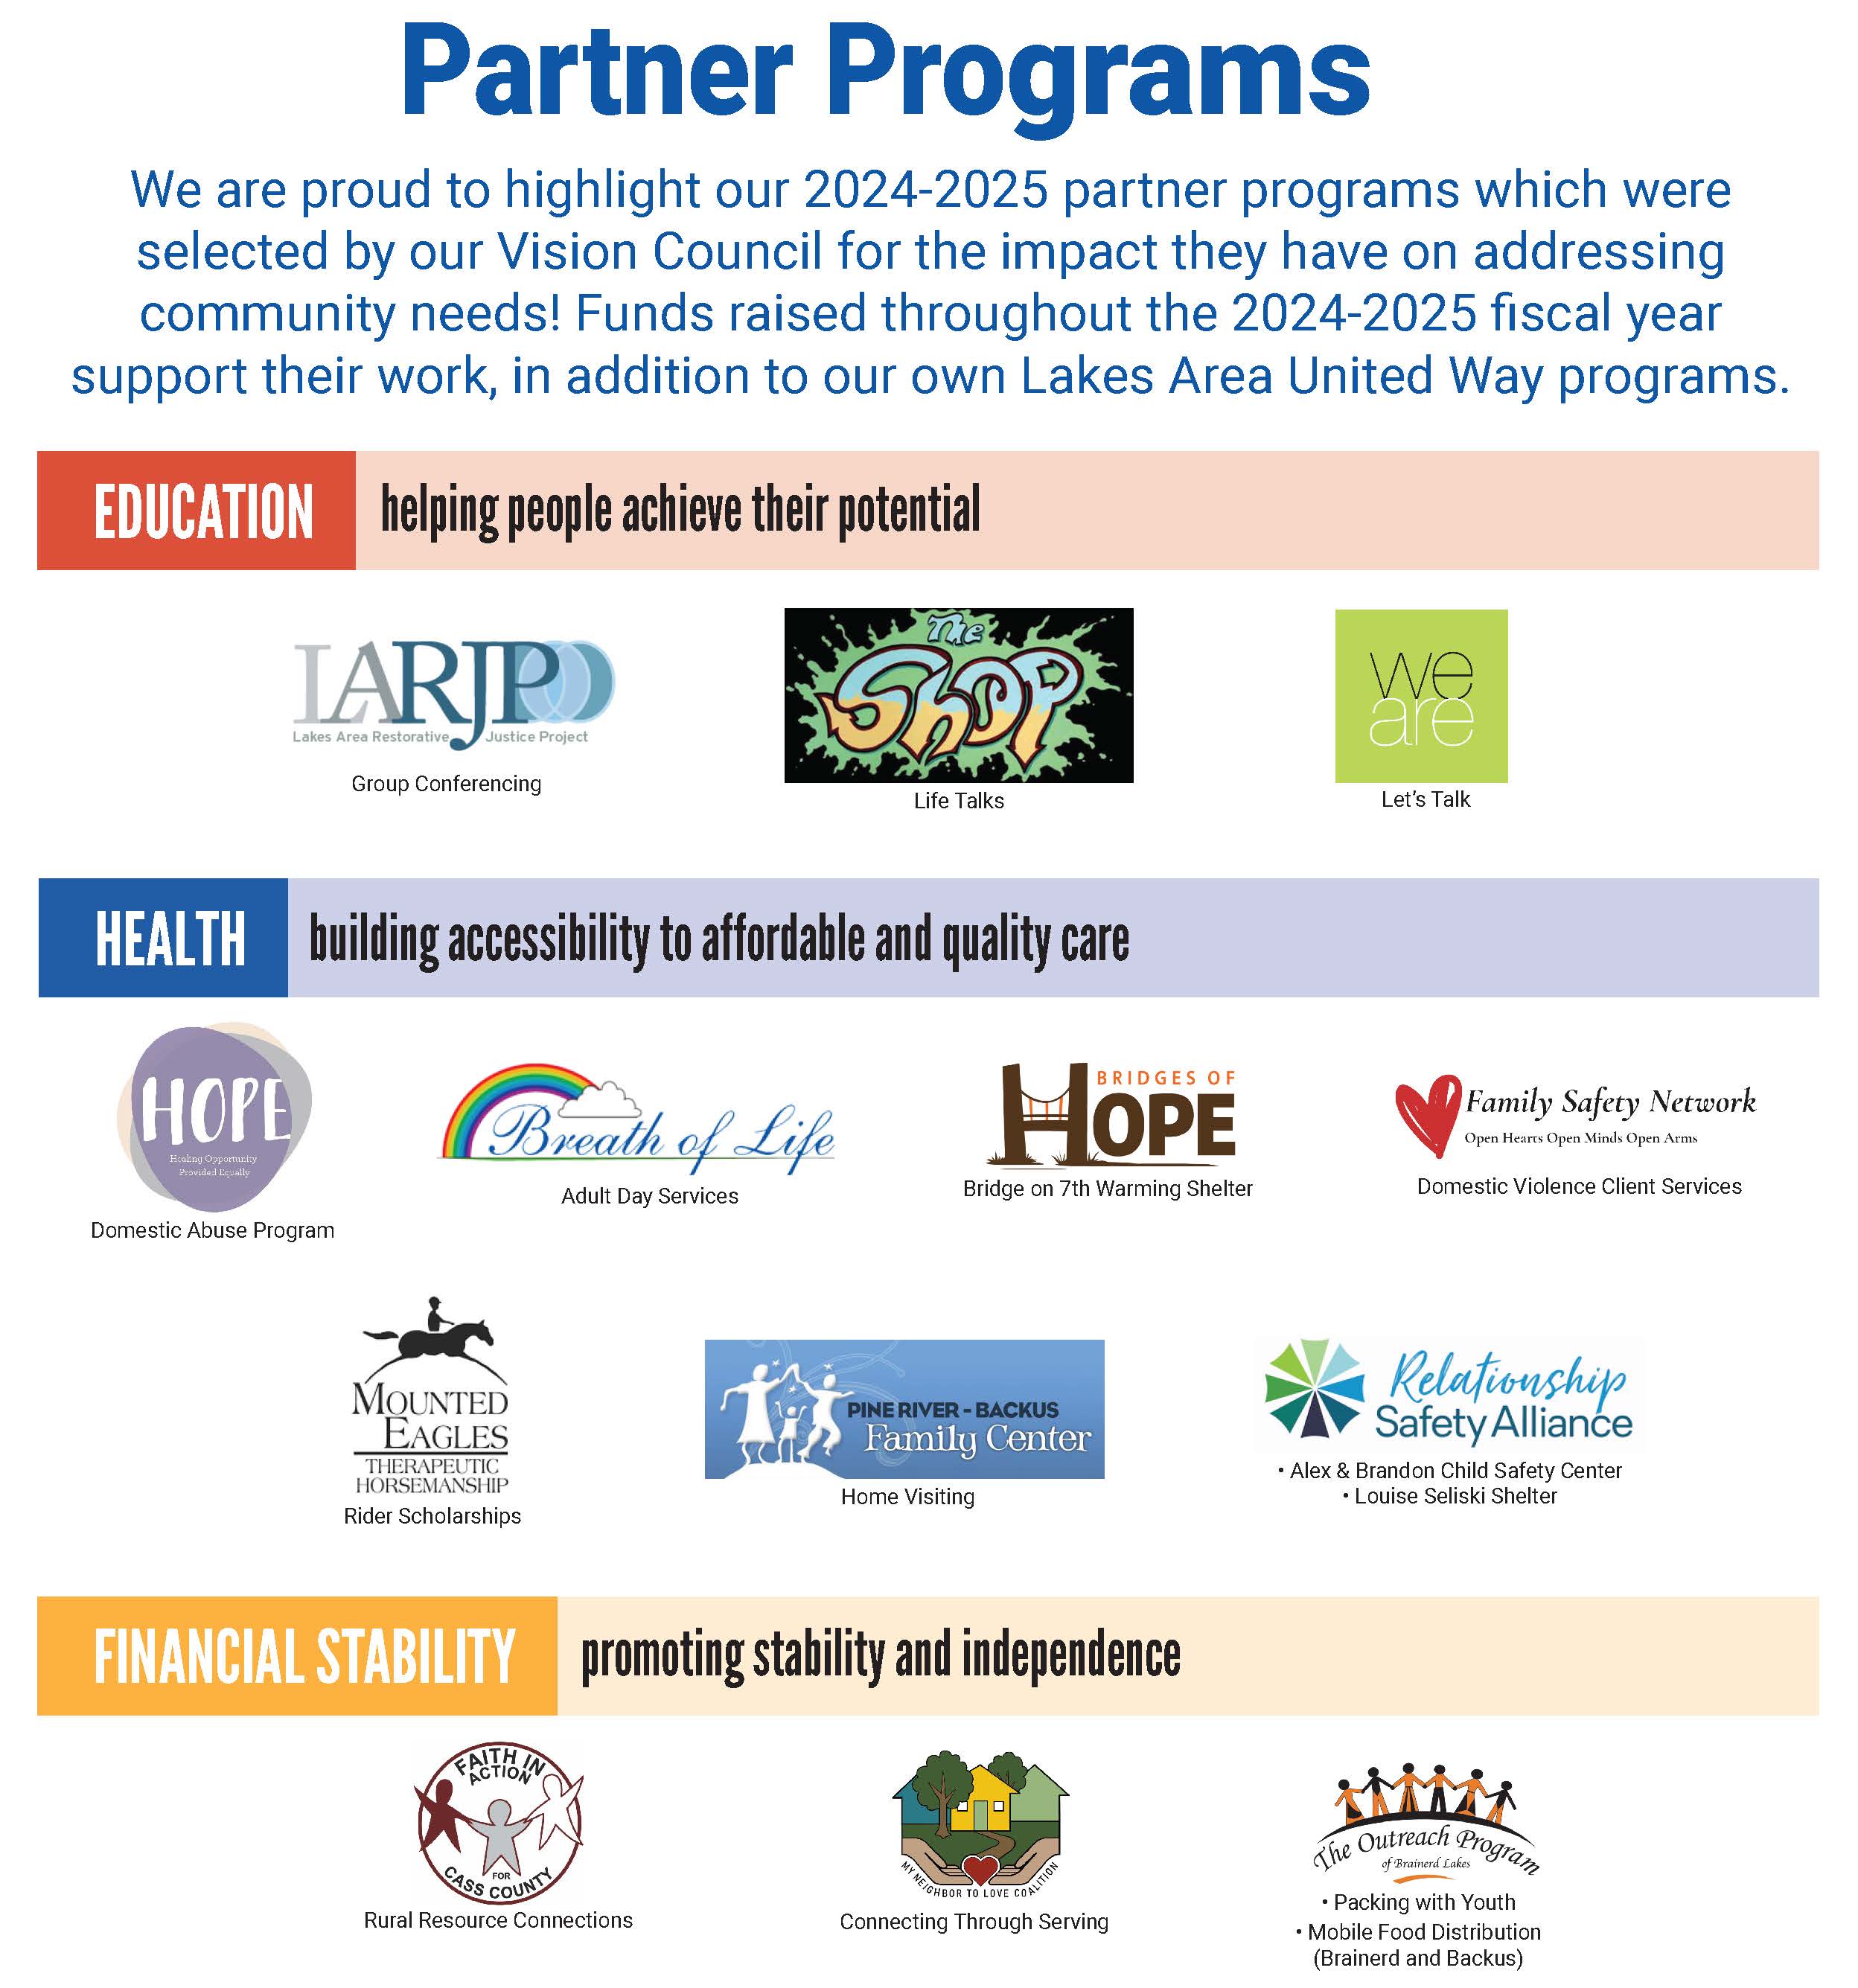 Lakes Area United Way 2023-24 Partner Programs